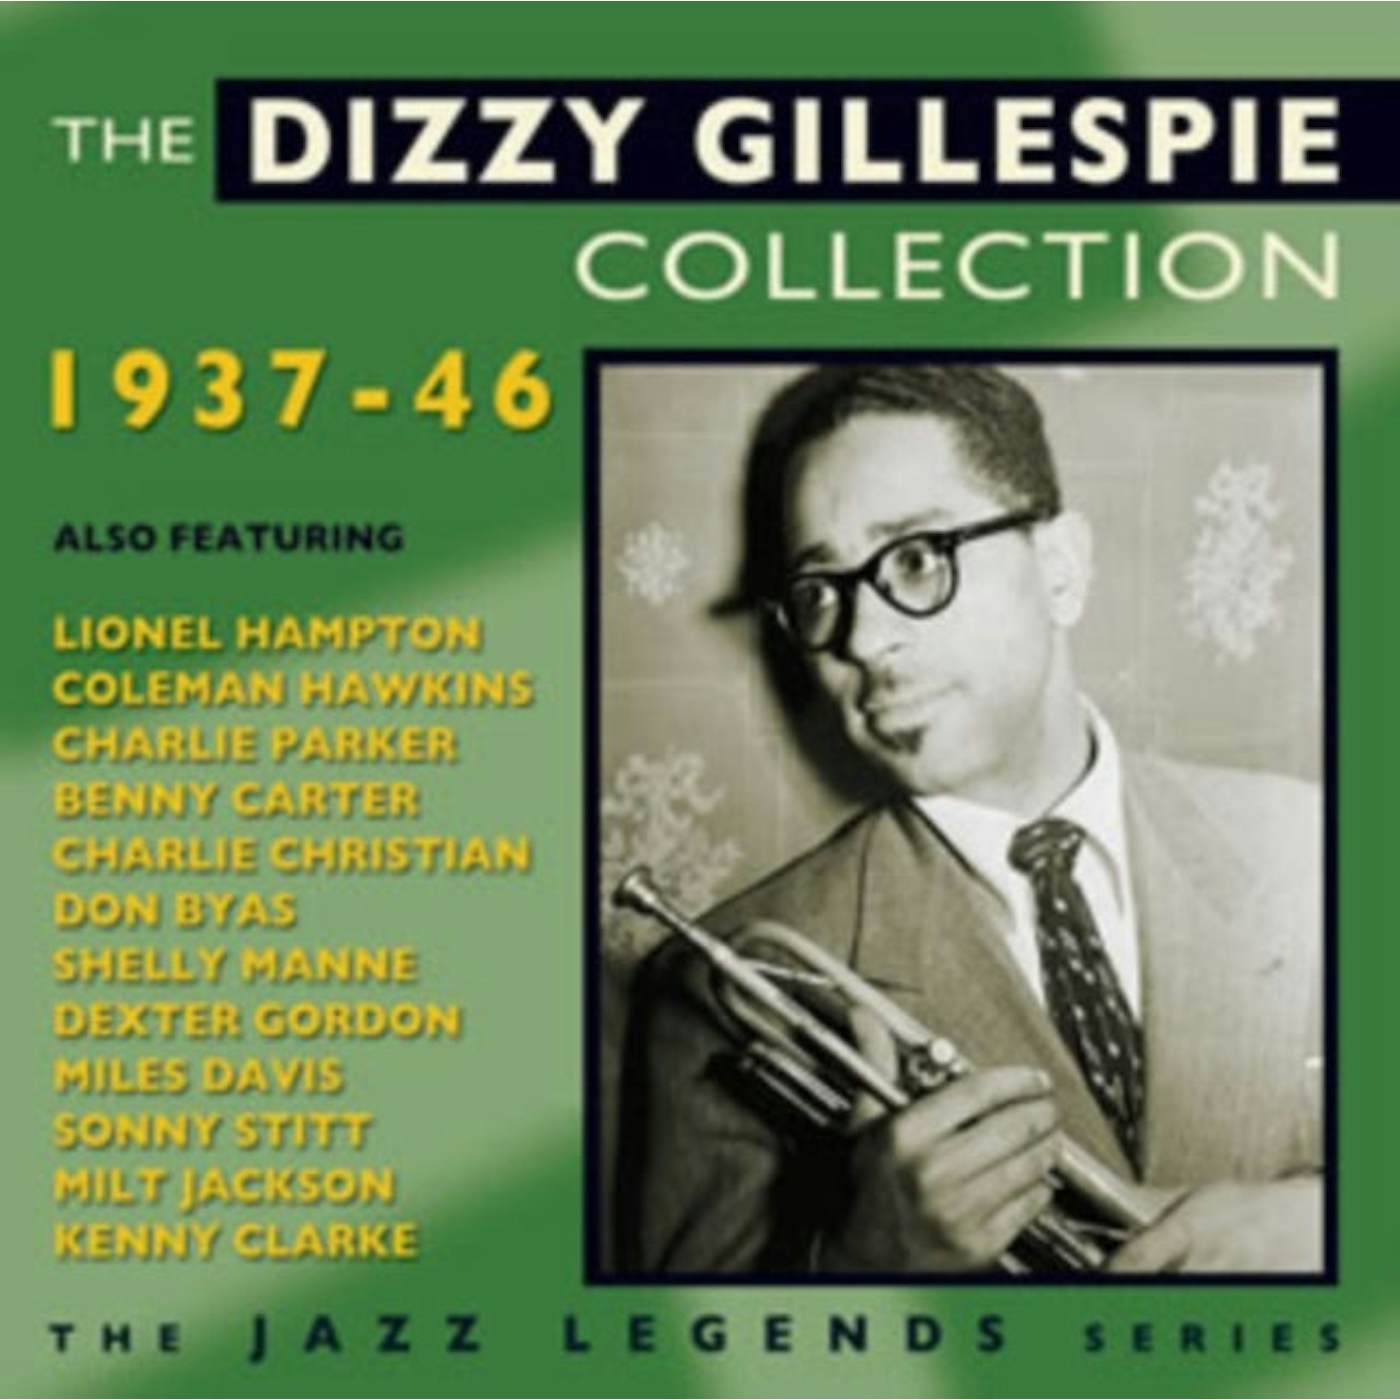 Dizzy Gillespie CD - The Dizzy Gillespie Collection 19 37-19 46